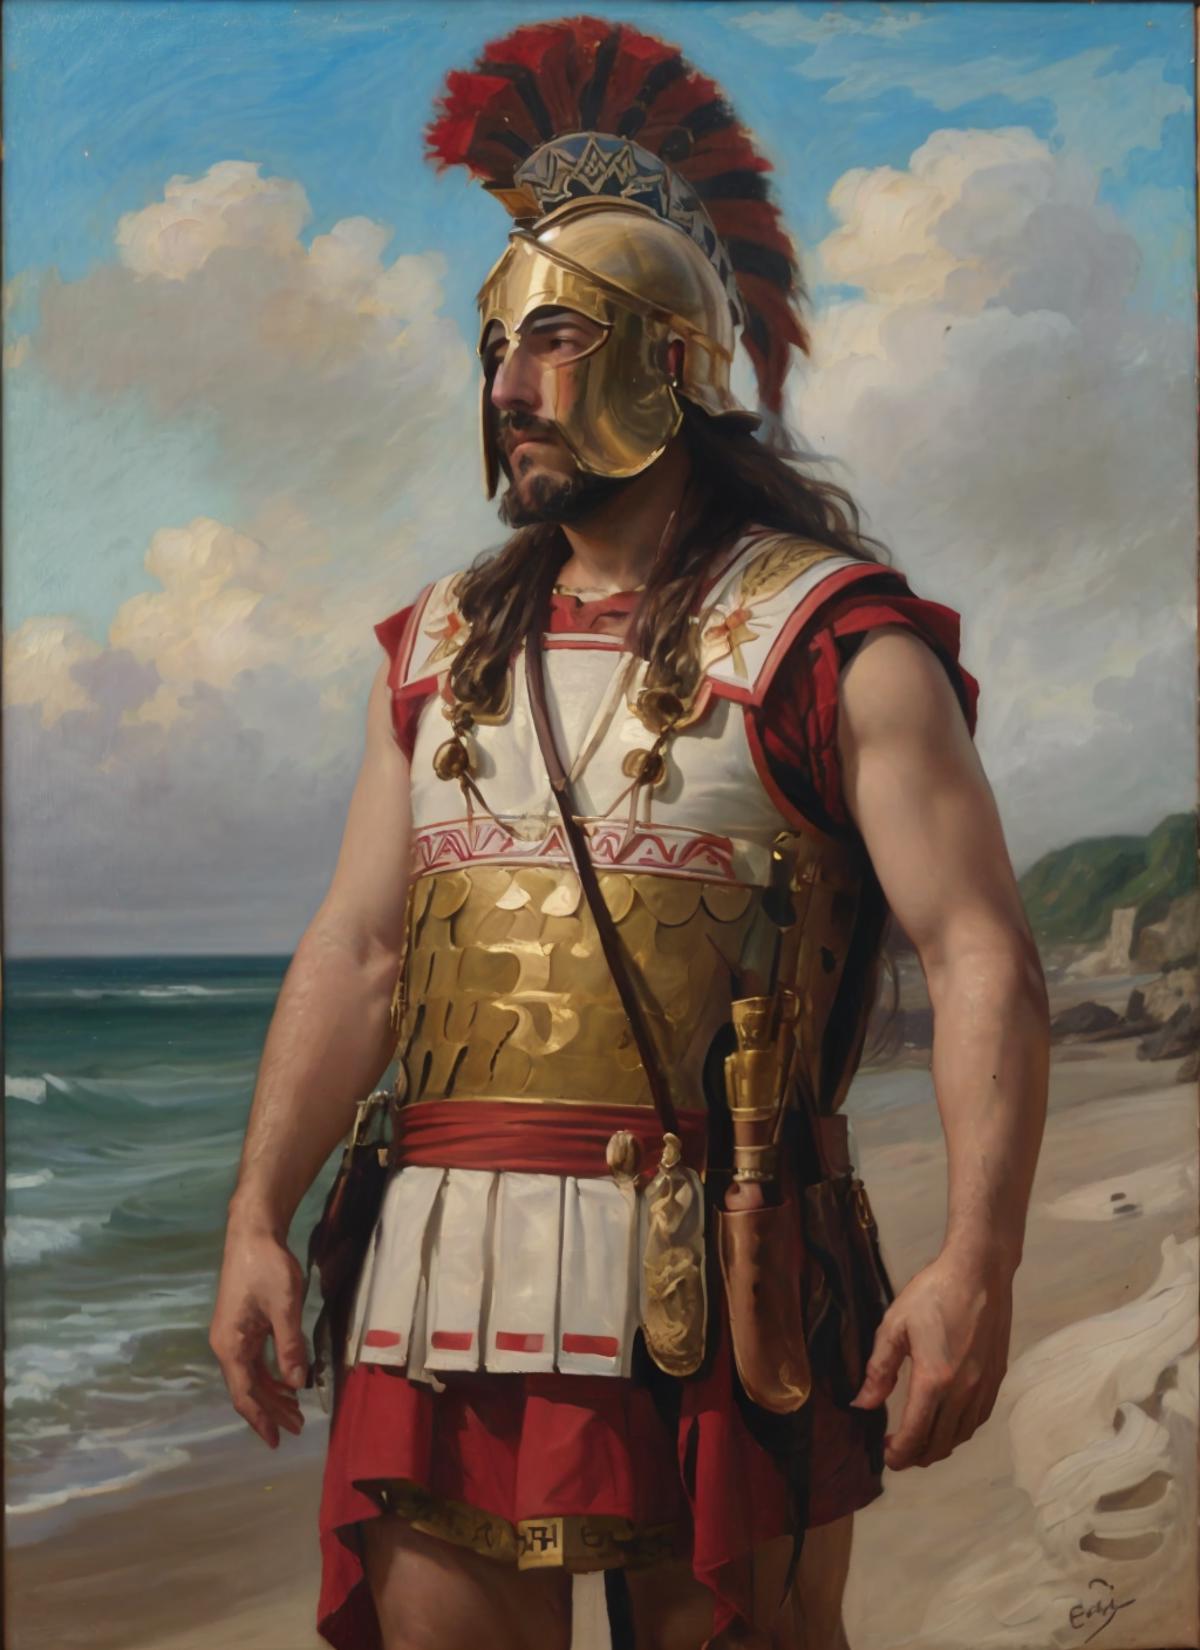 Greek Hoplite Warrior - Linothorax Armor image by MelmothTheWanderer